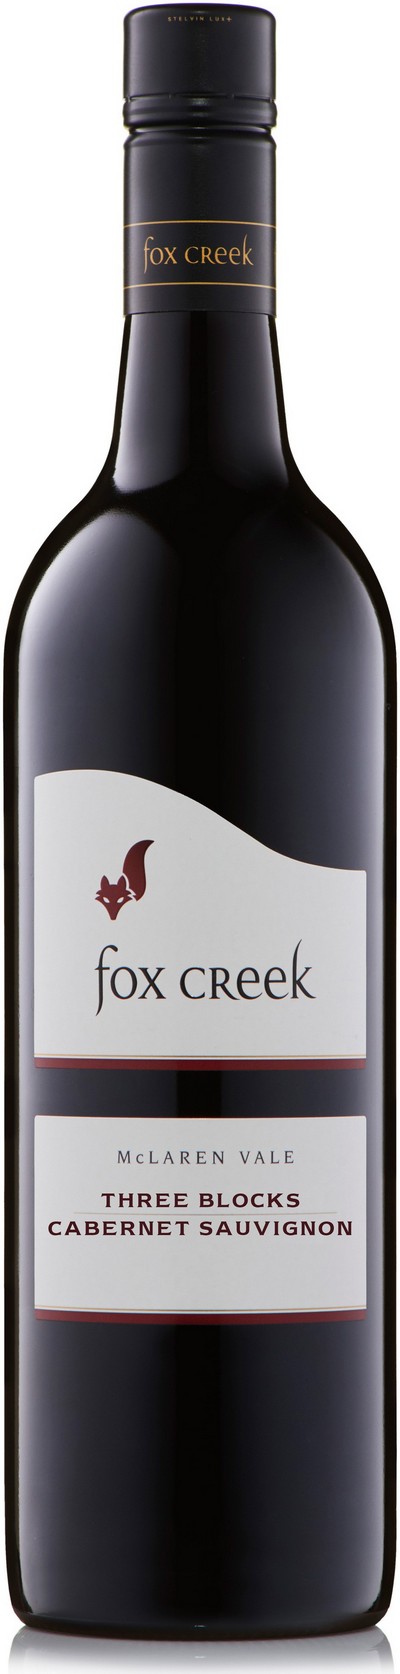 fox-creek-three-blocks-cabernet-sauvignon-2016